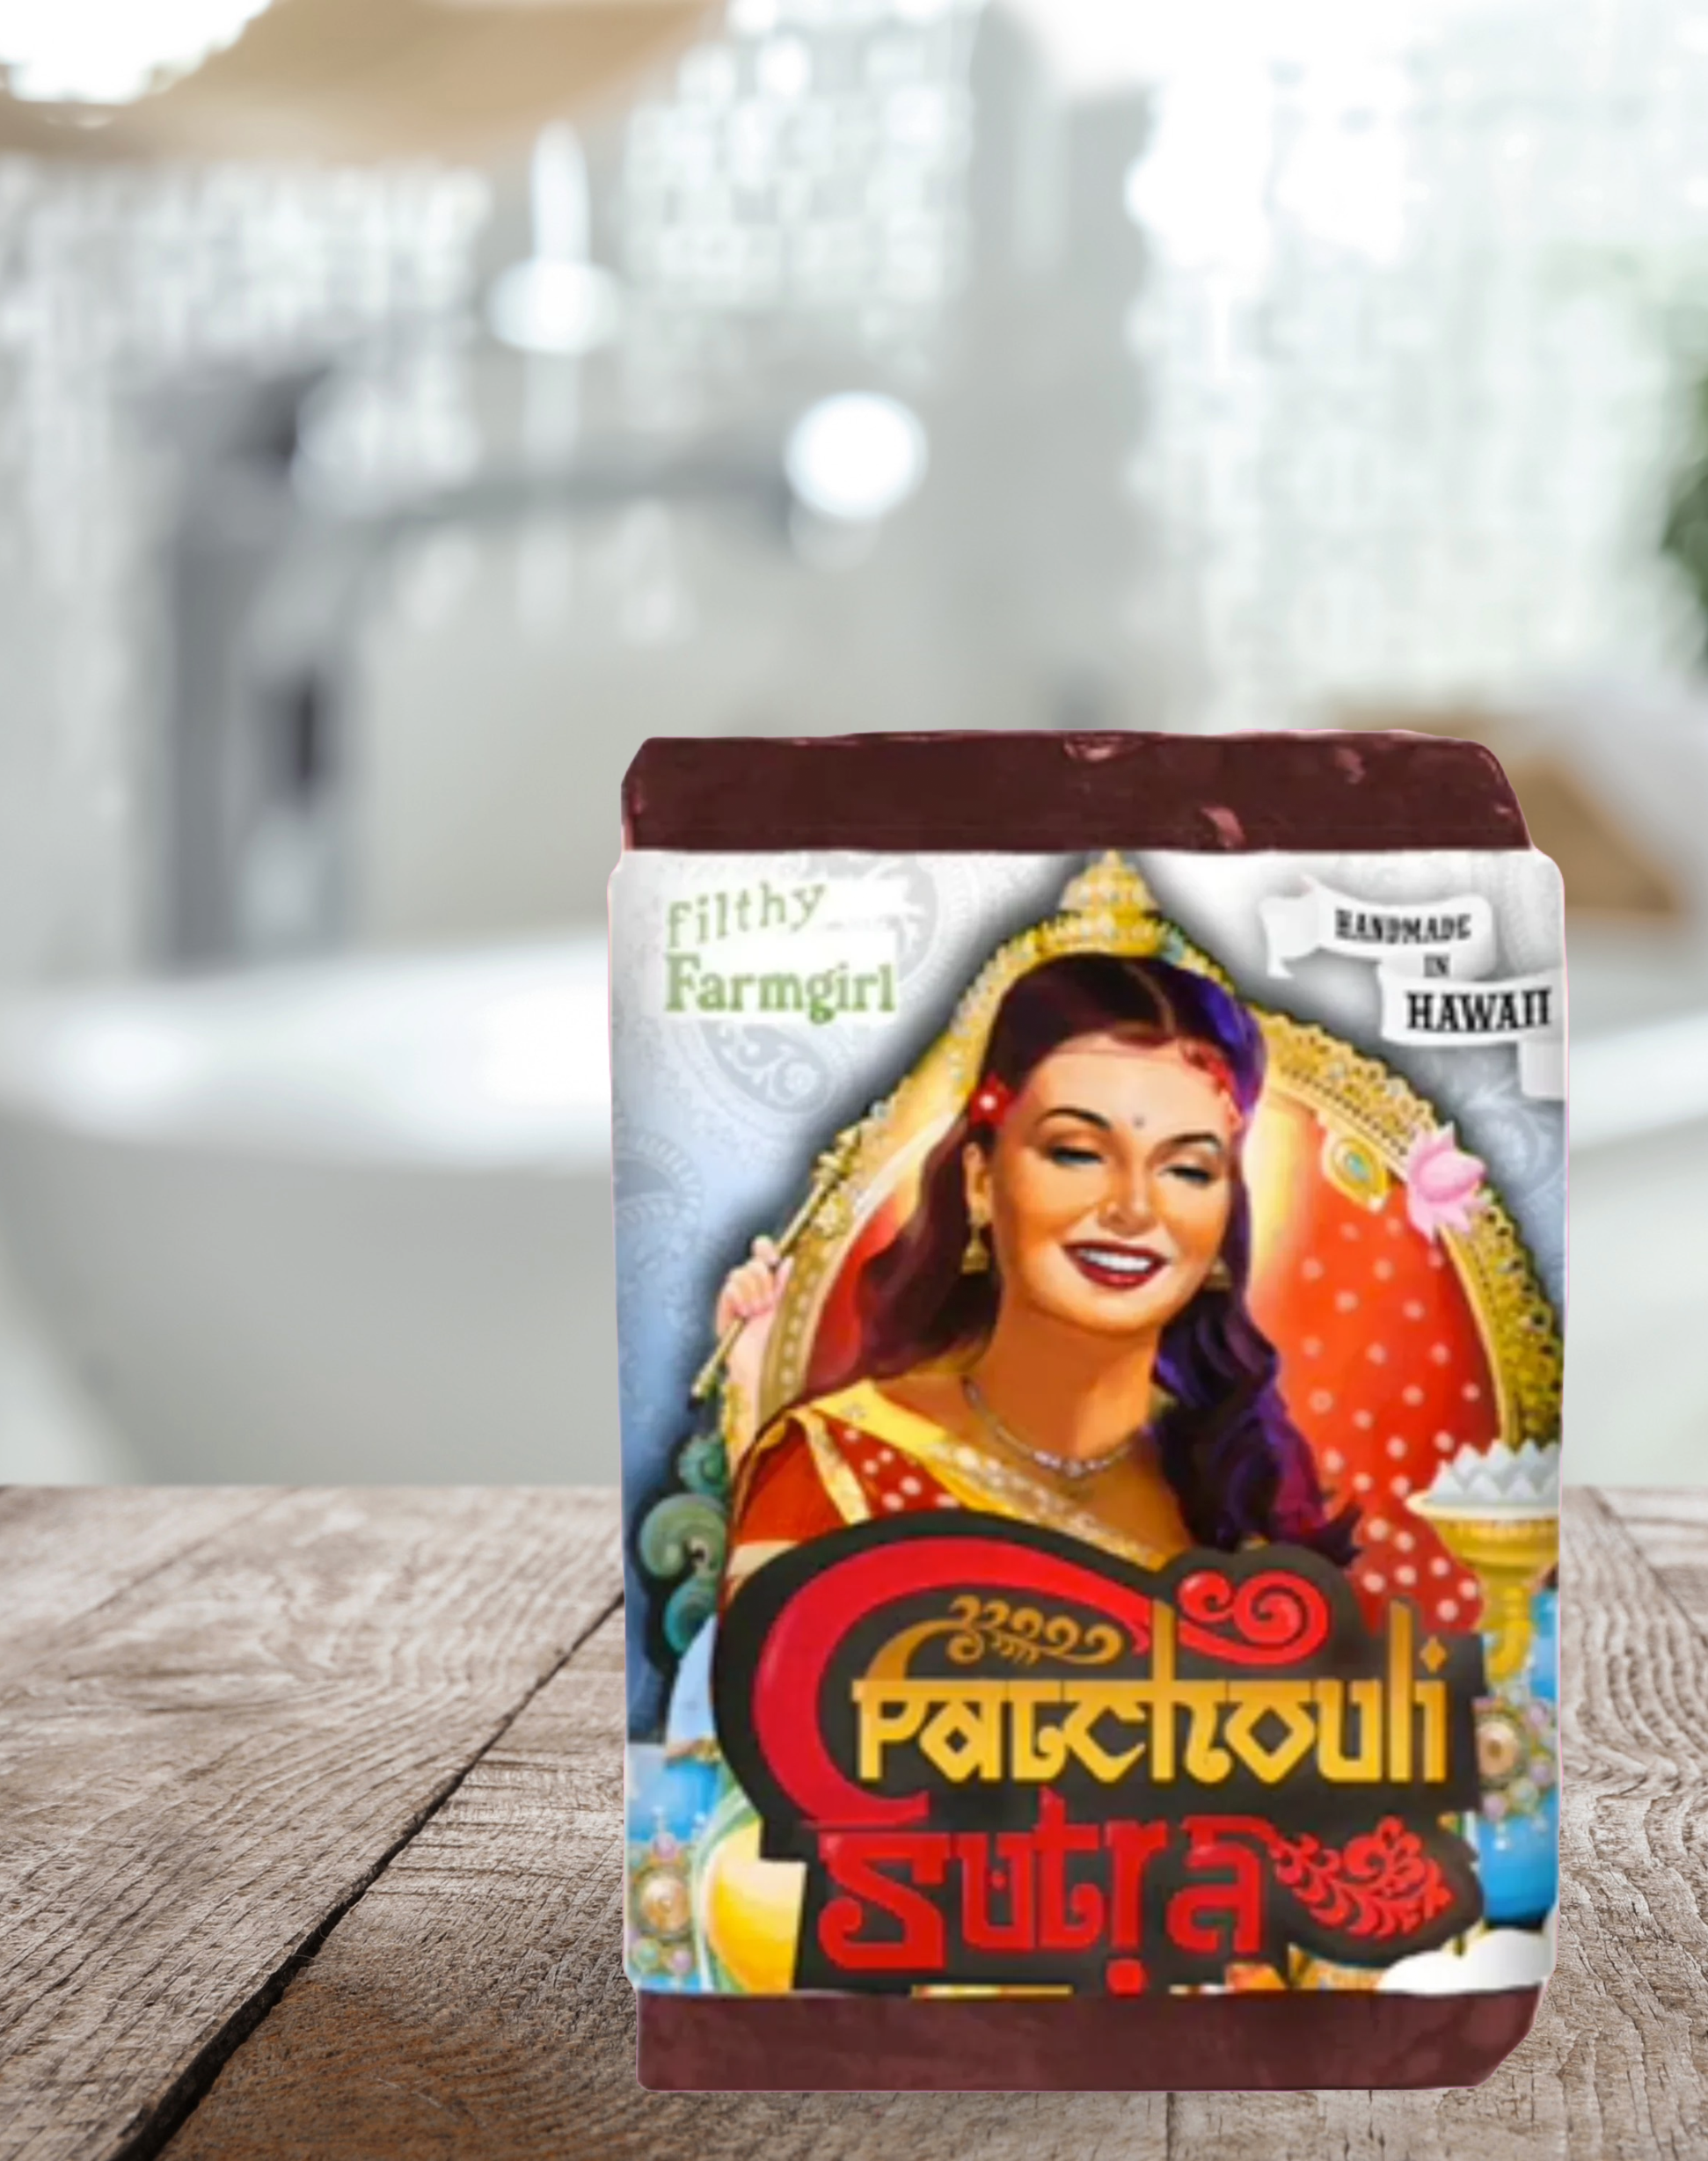 Patchouli Sutra Soap | Patchouli and Orange | Filthy Farm Girl